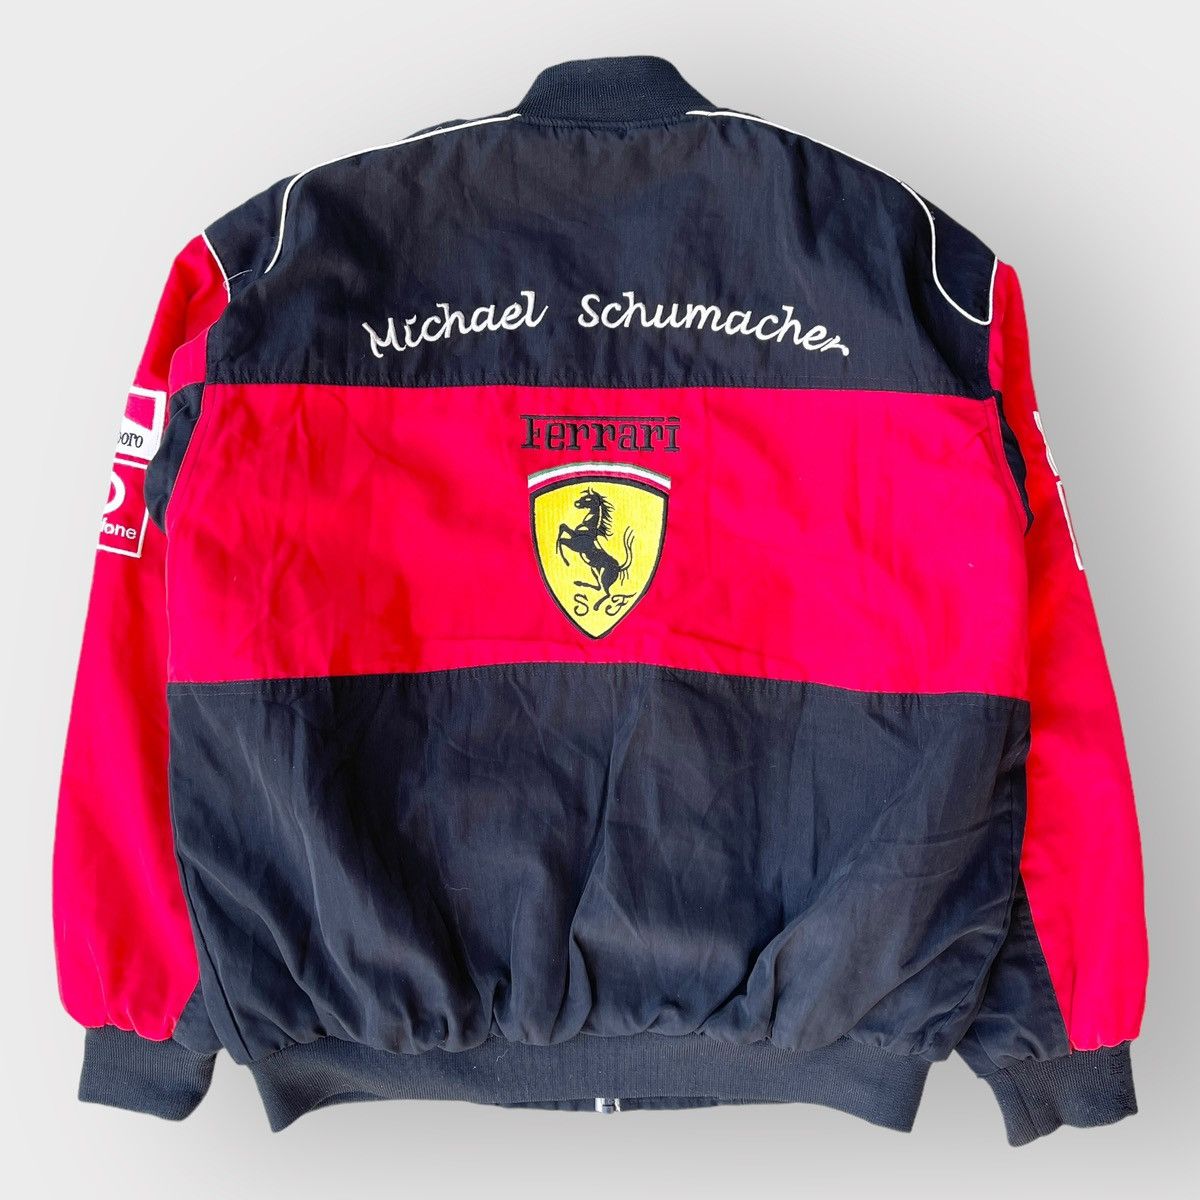 Vintage 2000s Ferrari Michael Schumacher F1 Racing Jacket - 10